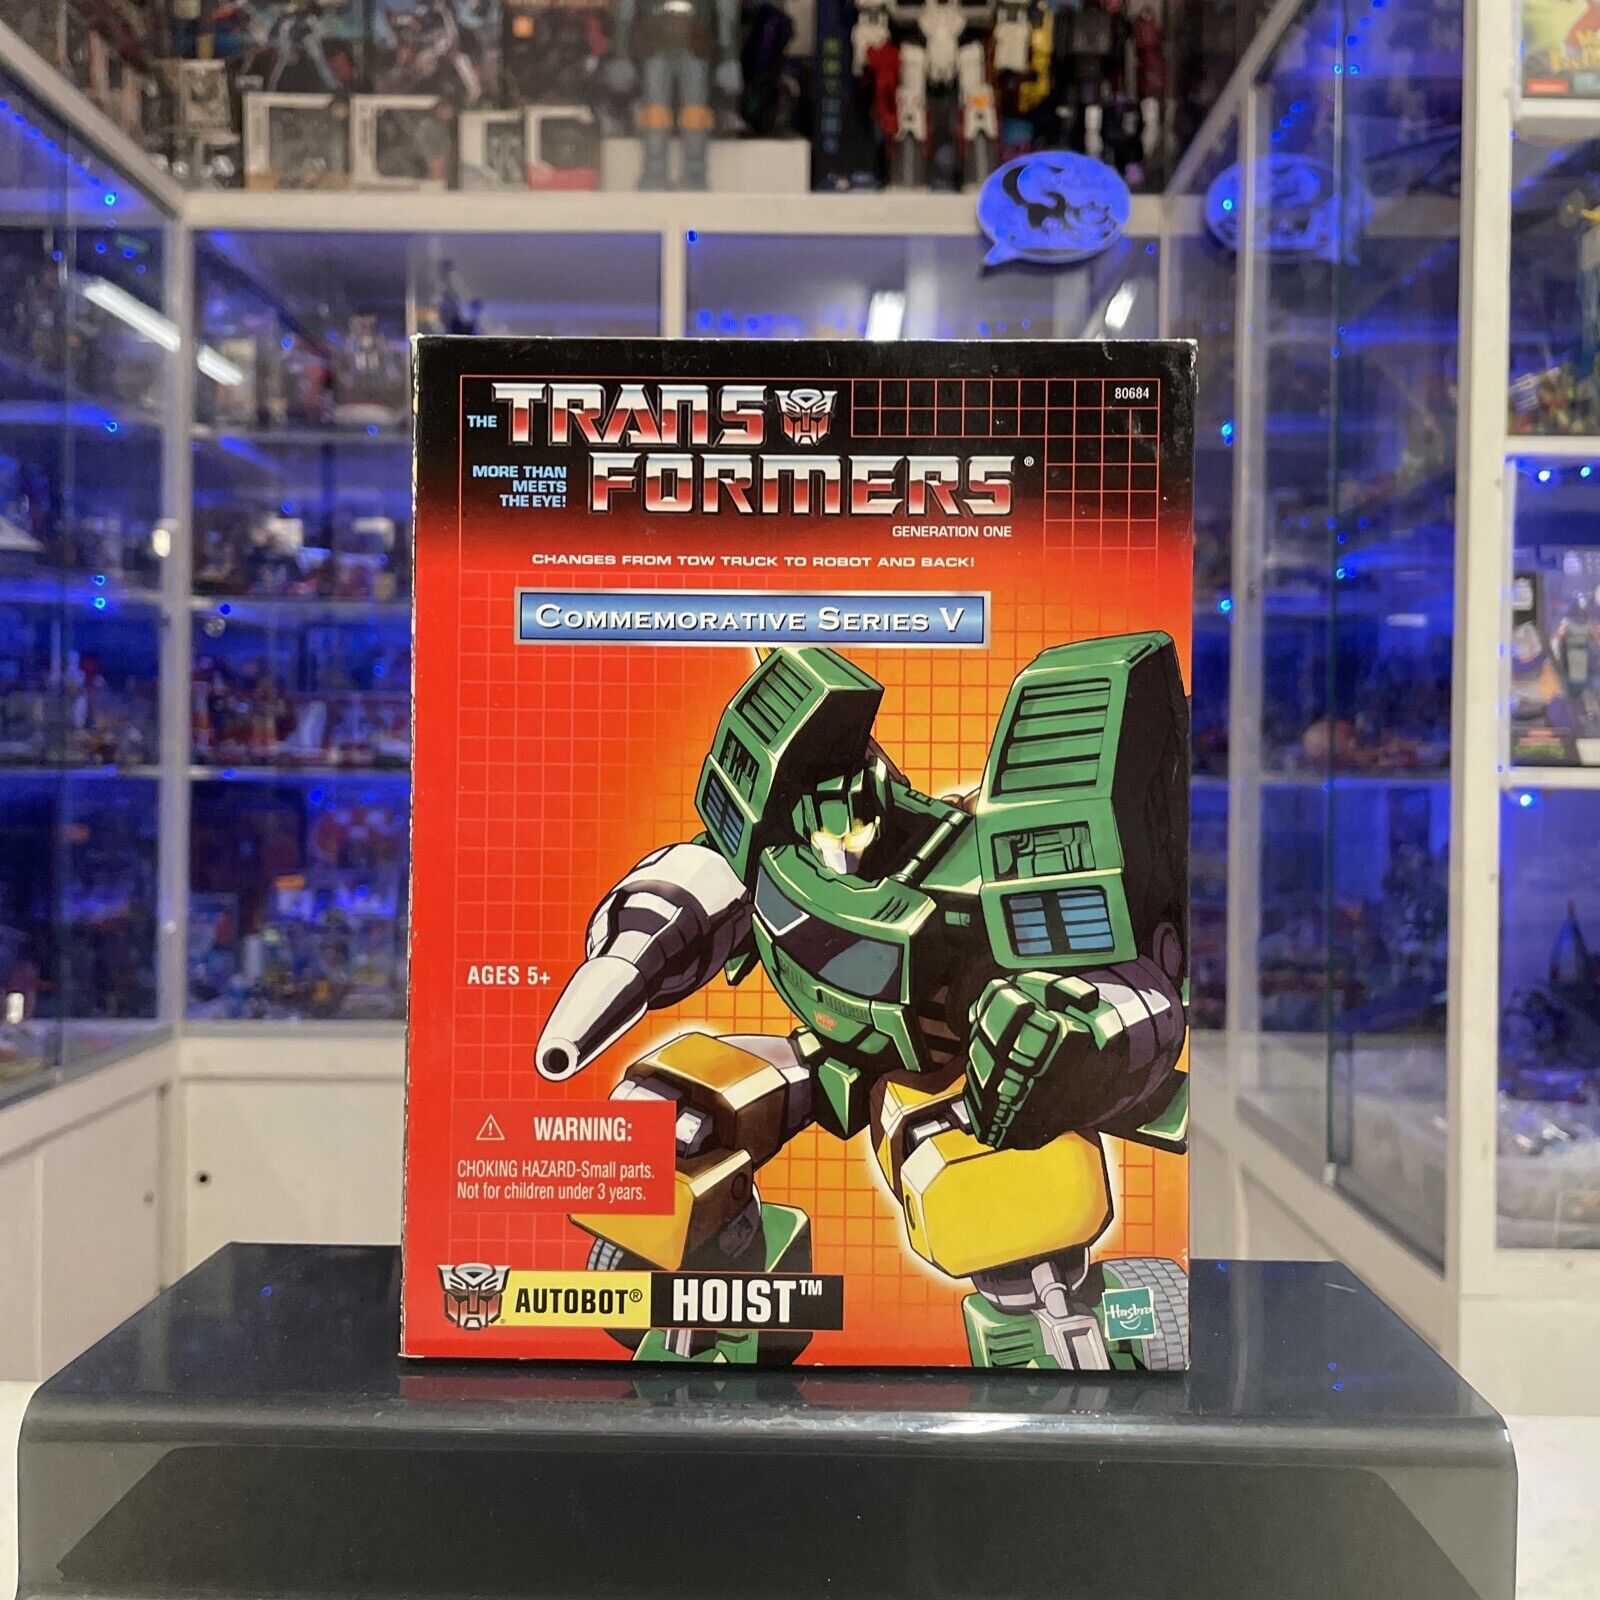 Transformers-Hoist-MIB-Commemorative-Series-2002-Hasbro-Takara-134798496785